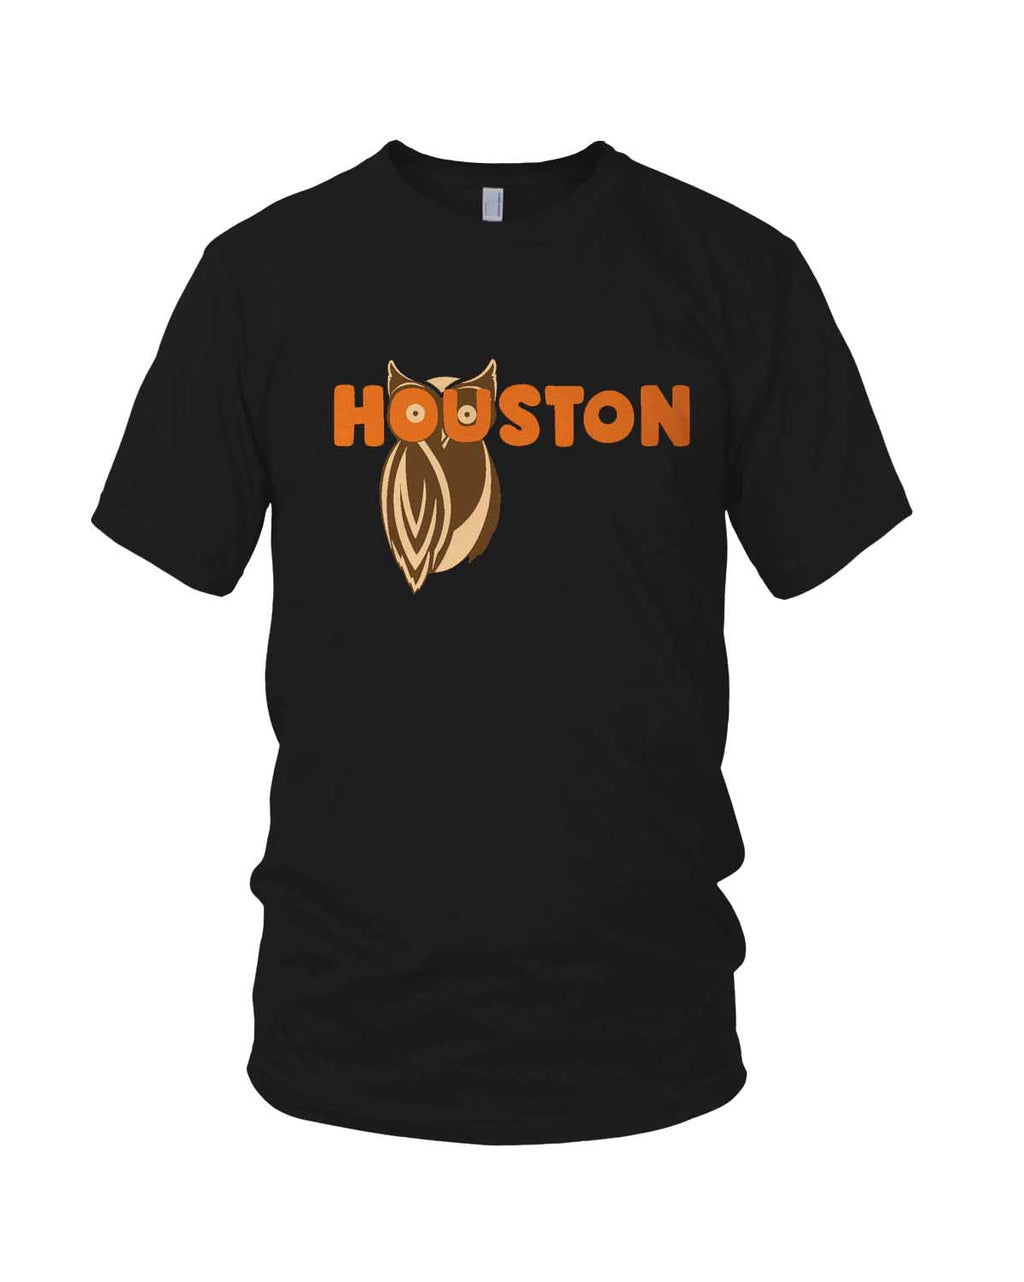 Houston Hooters black t shirt